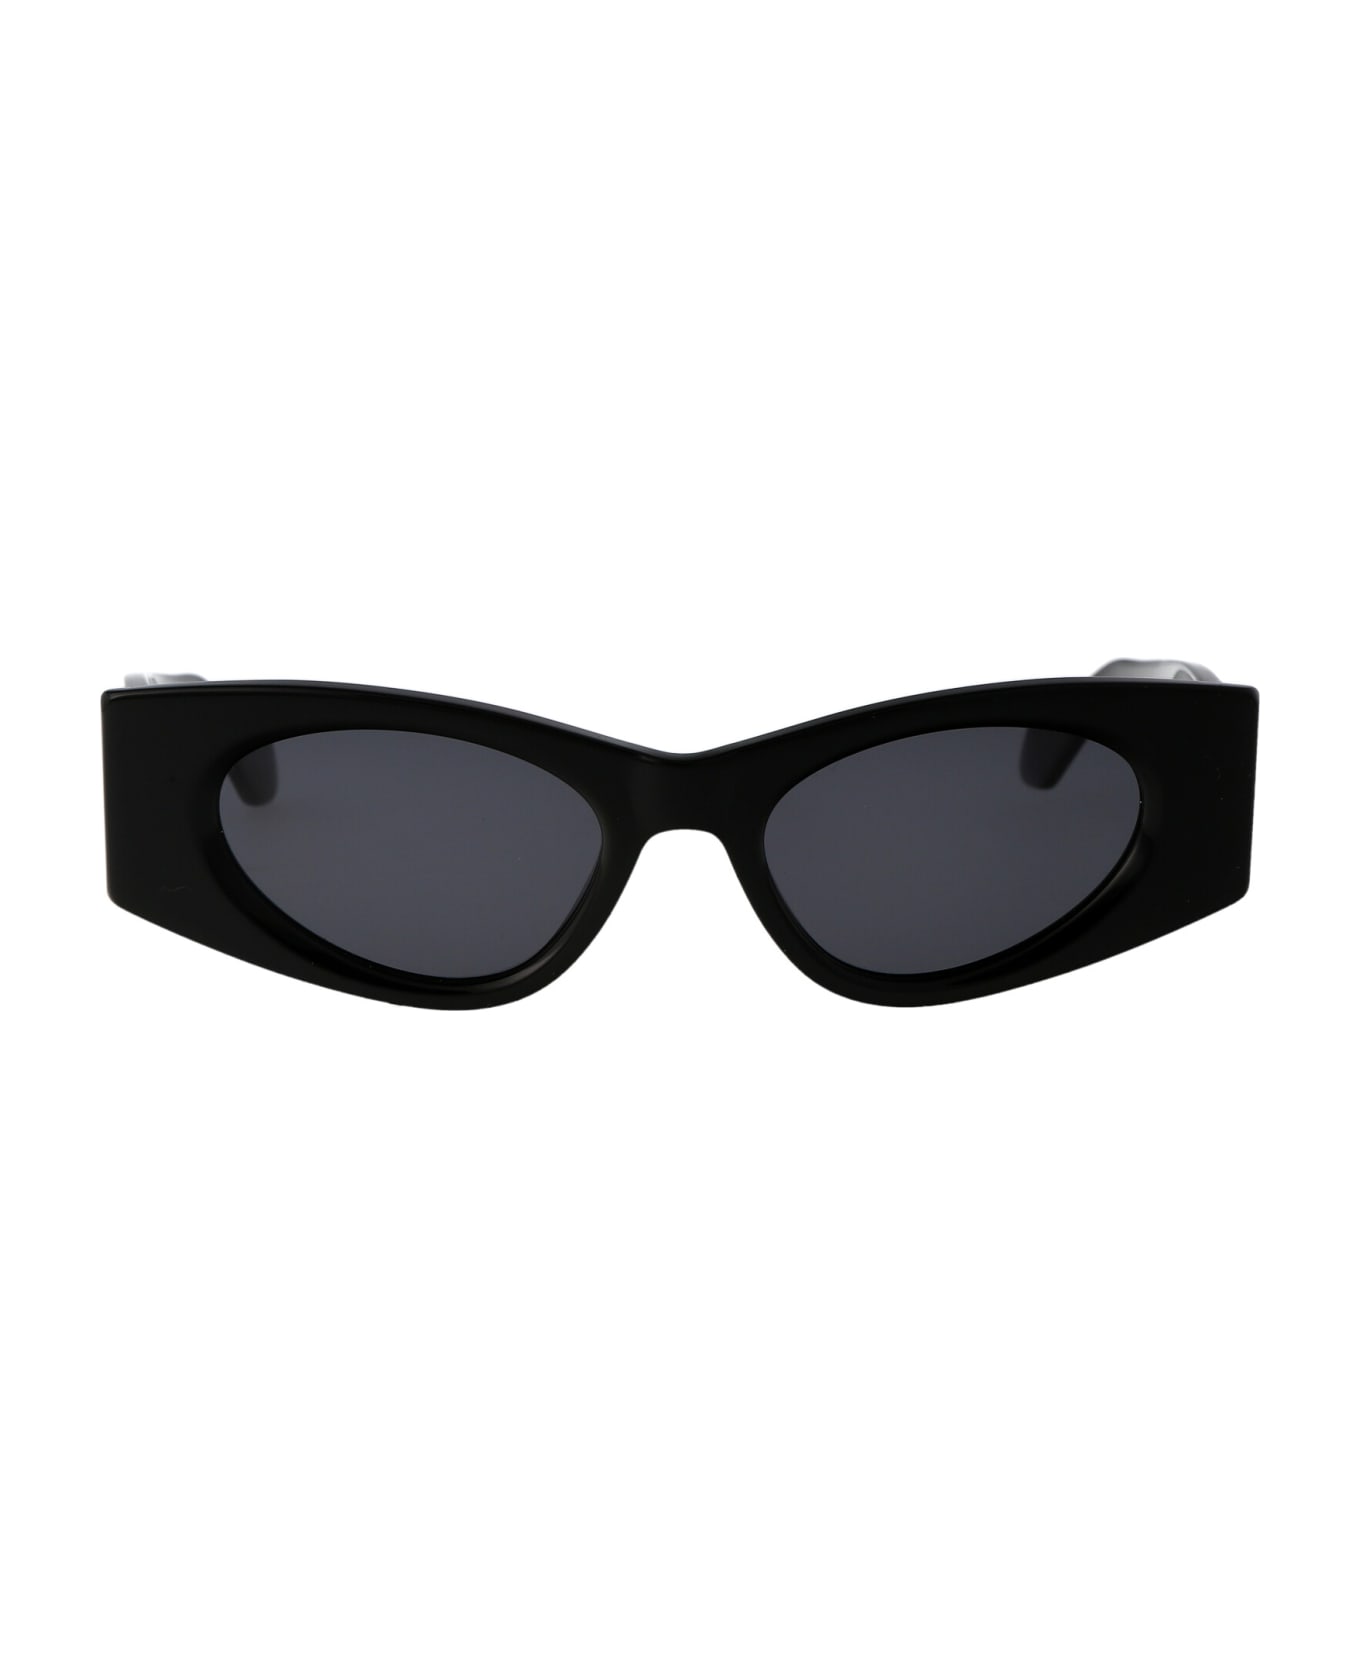 Alaia Aa0075s Sunglasses - 001 BLACK BLACK GREY